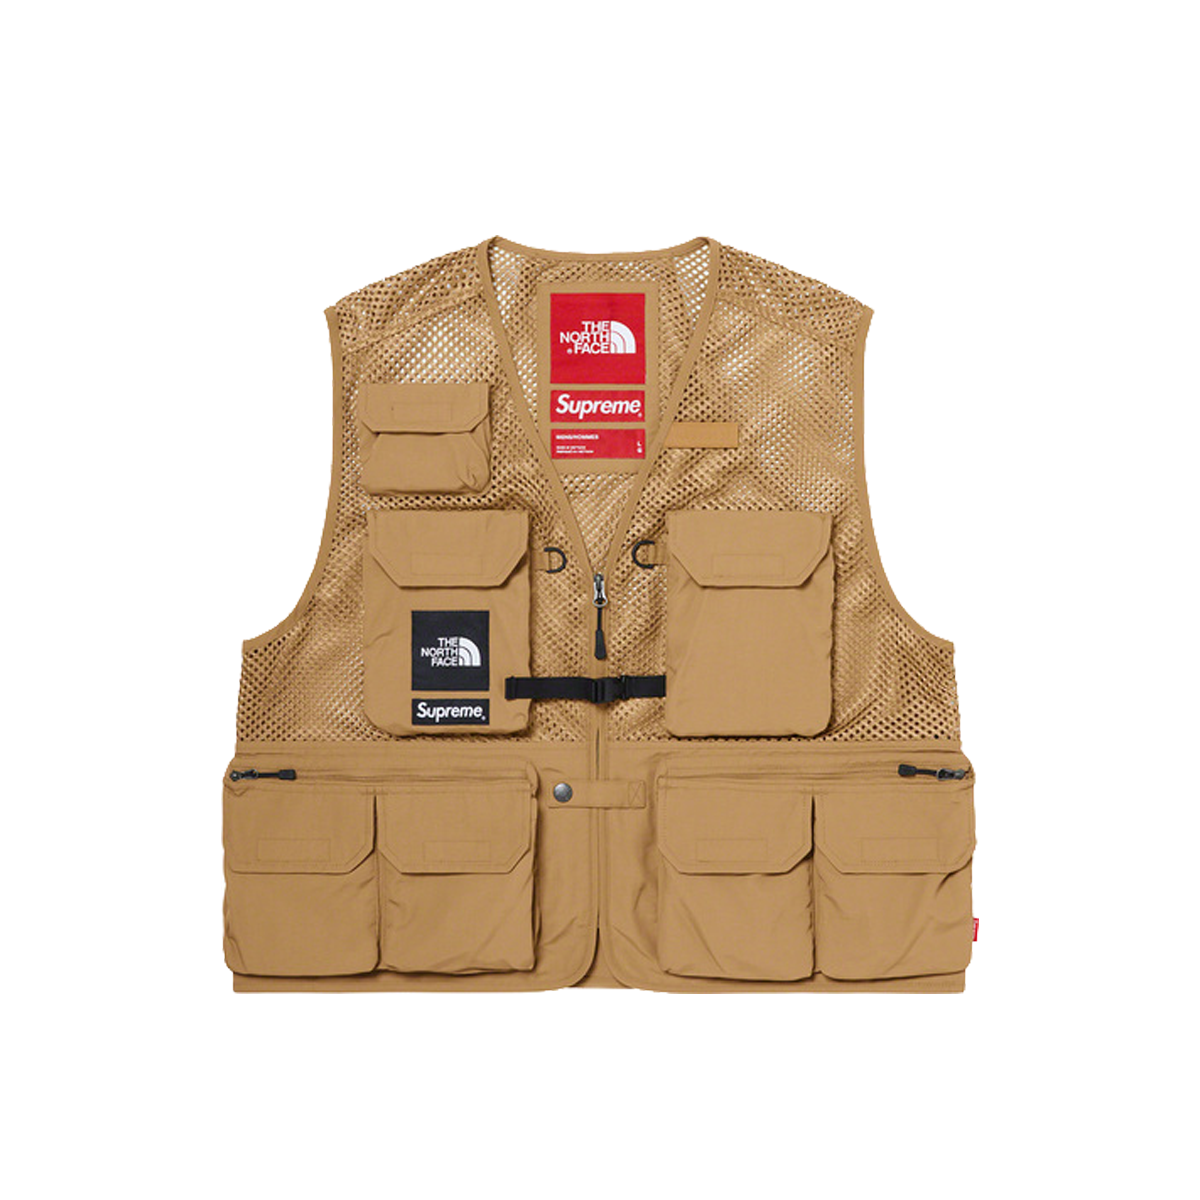 Supreme/The North Face Cargo Vest "Gold"